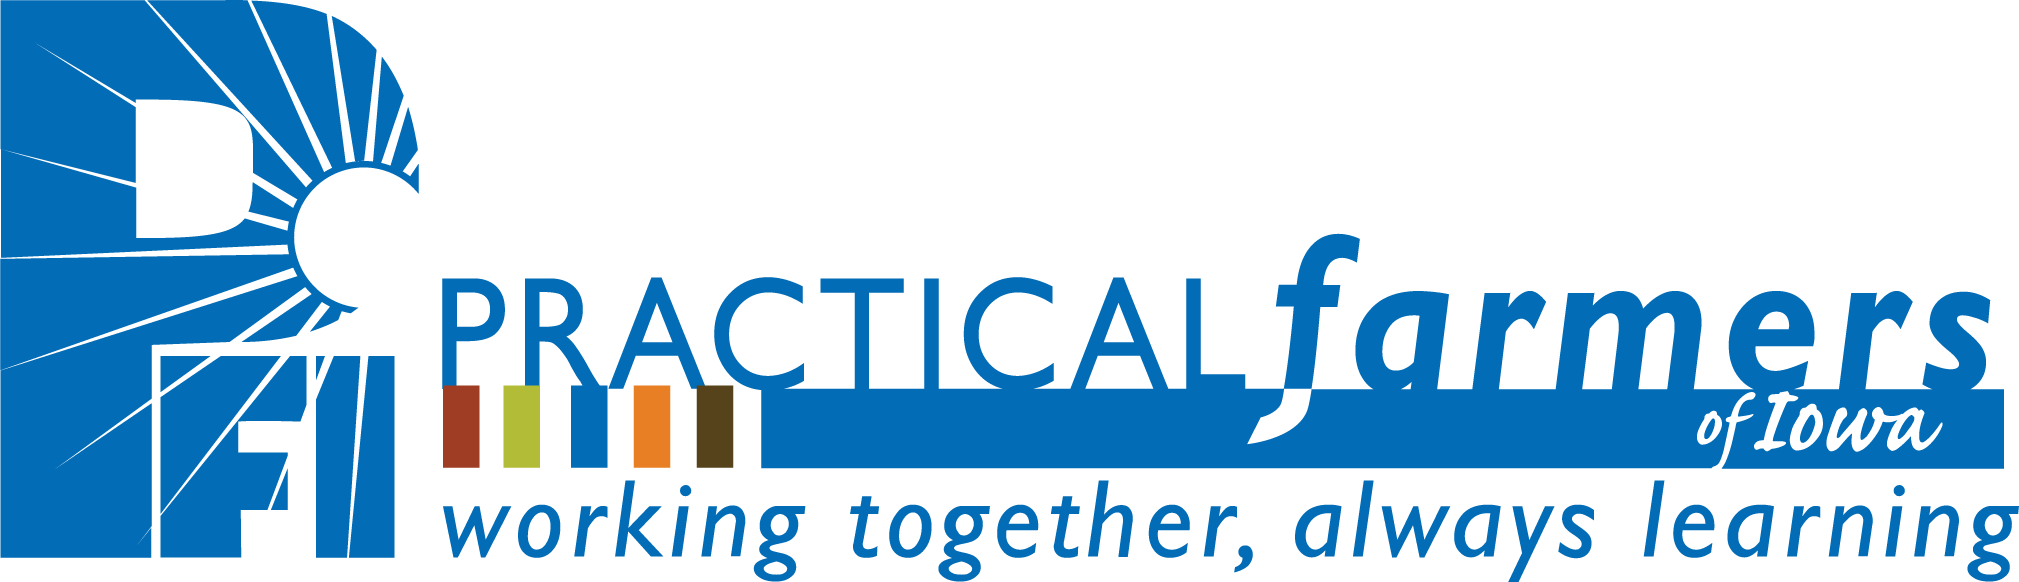 Organization Logo for the Practical Farmers of Iowa 